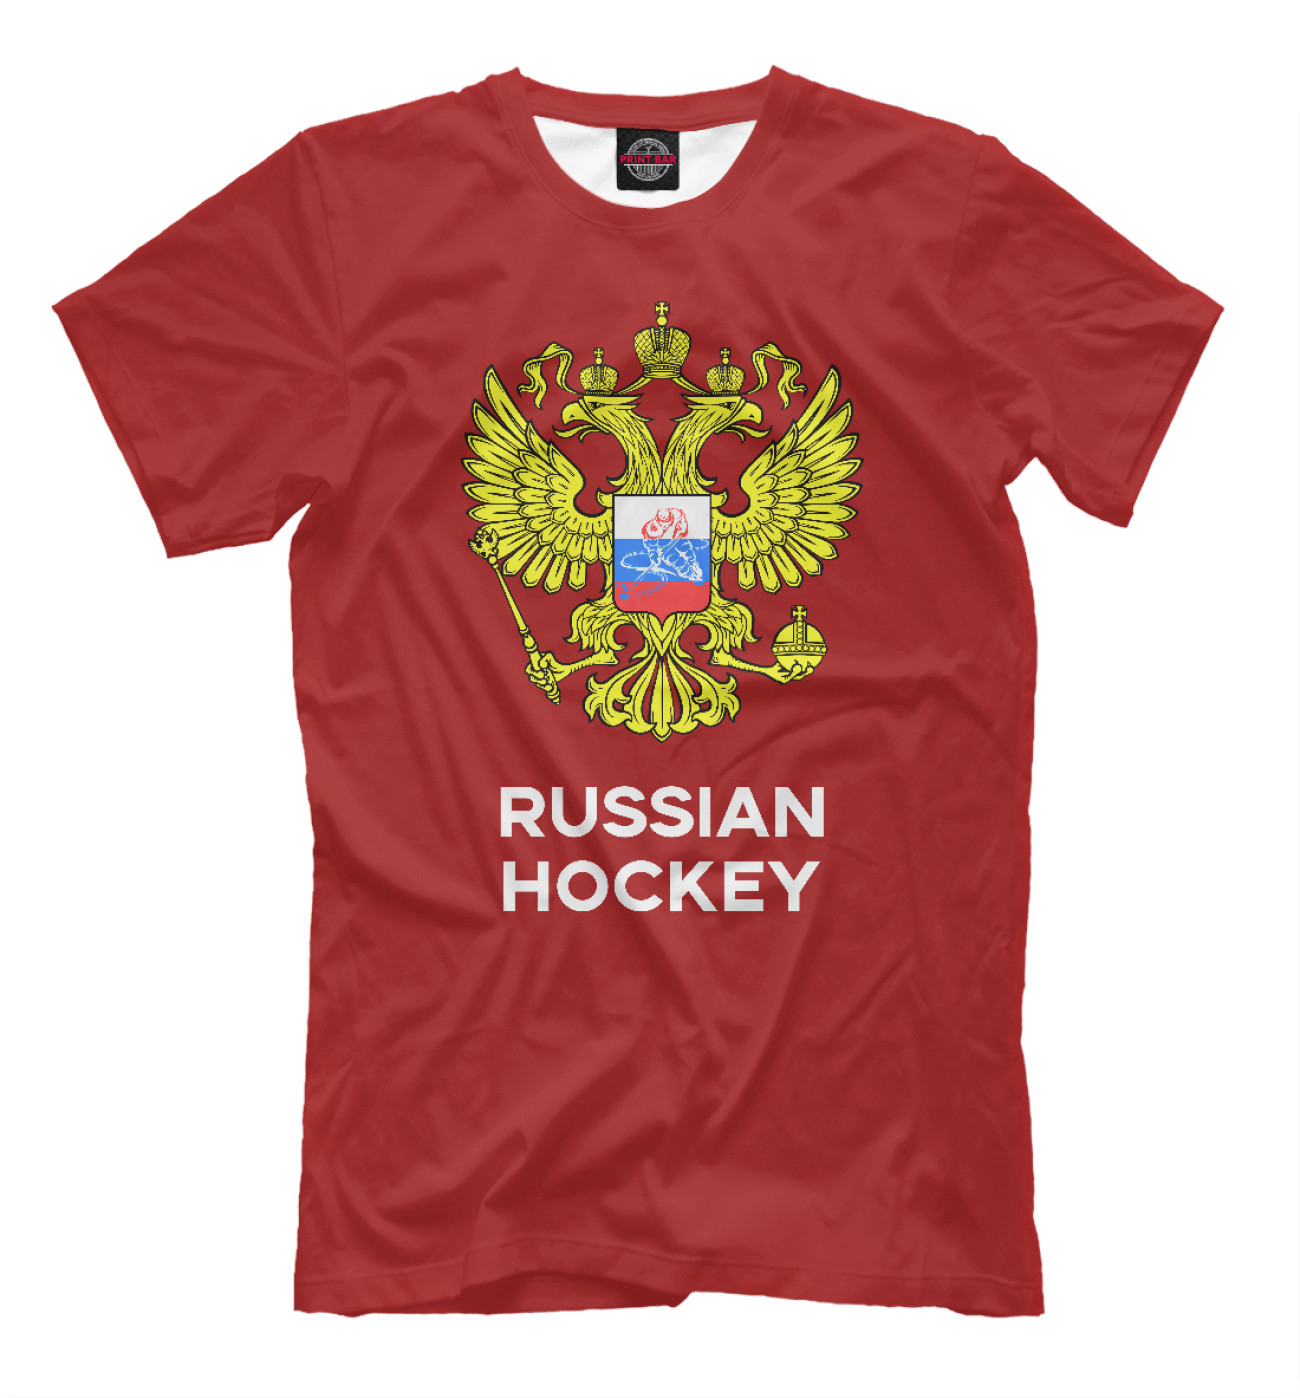 Мужская Футболка Russian Hockey, артикул: CMR-497723-fut-2